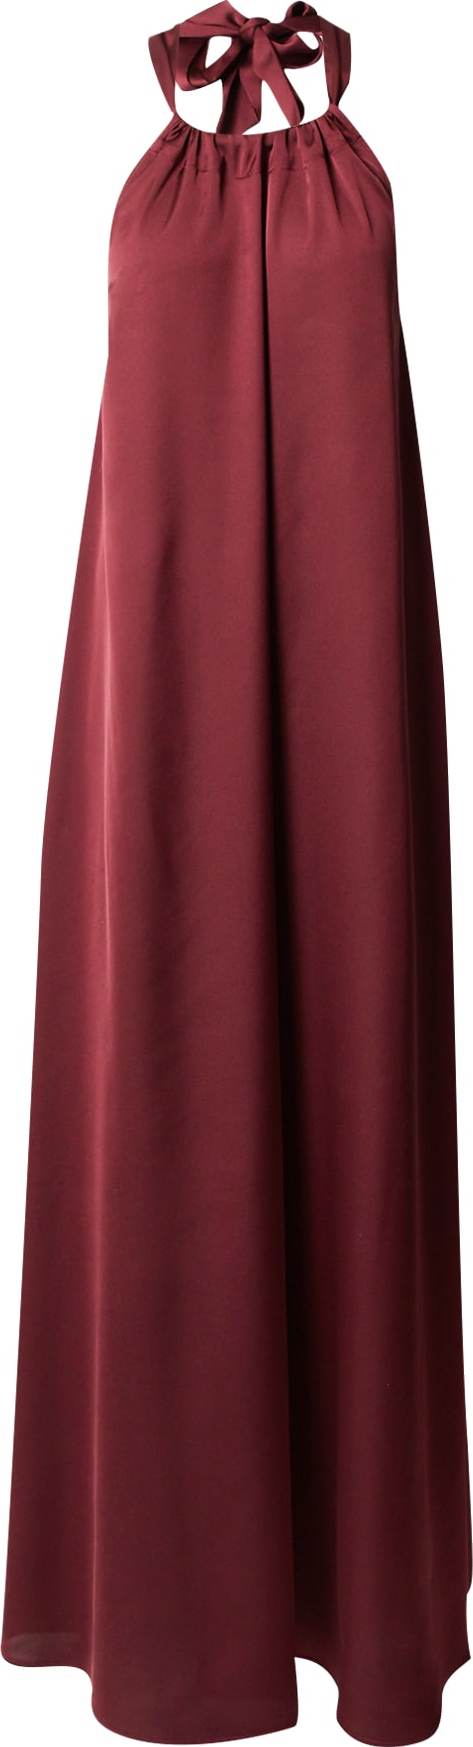 Essentiel Antwerp Společenské šaty 'Daxos' burgundská červeň